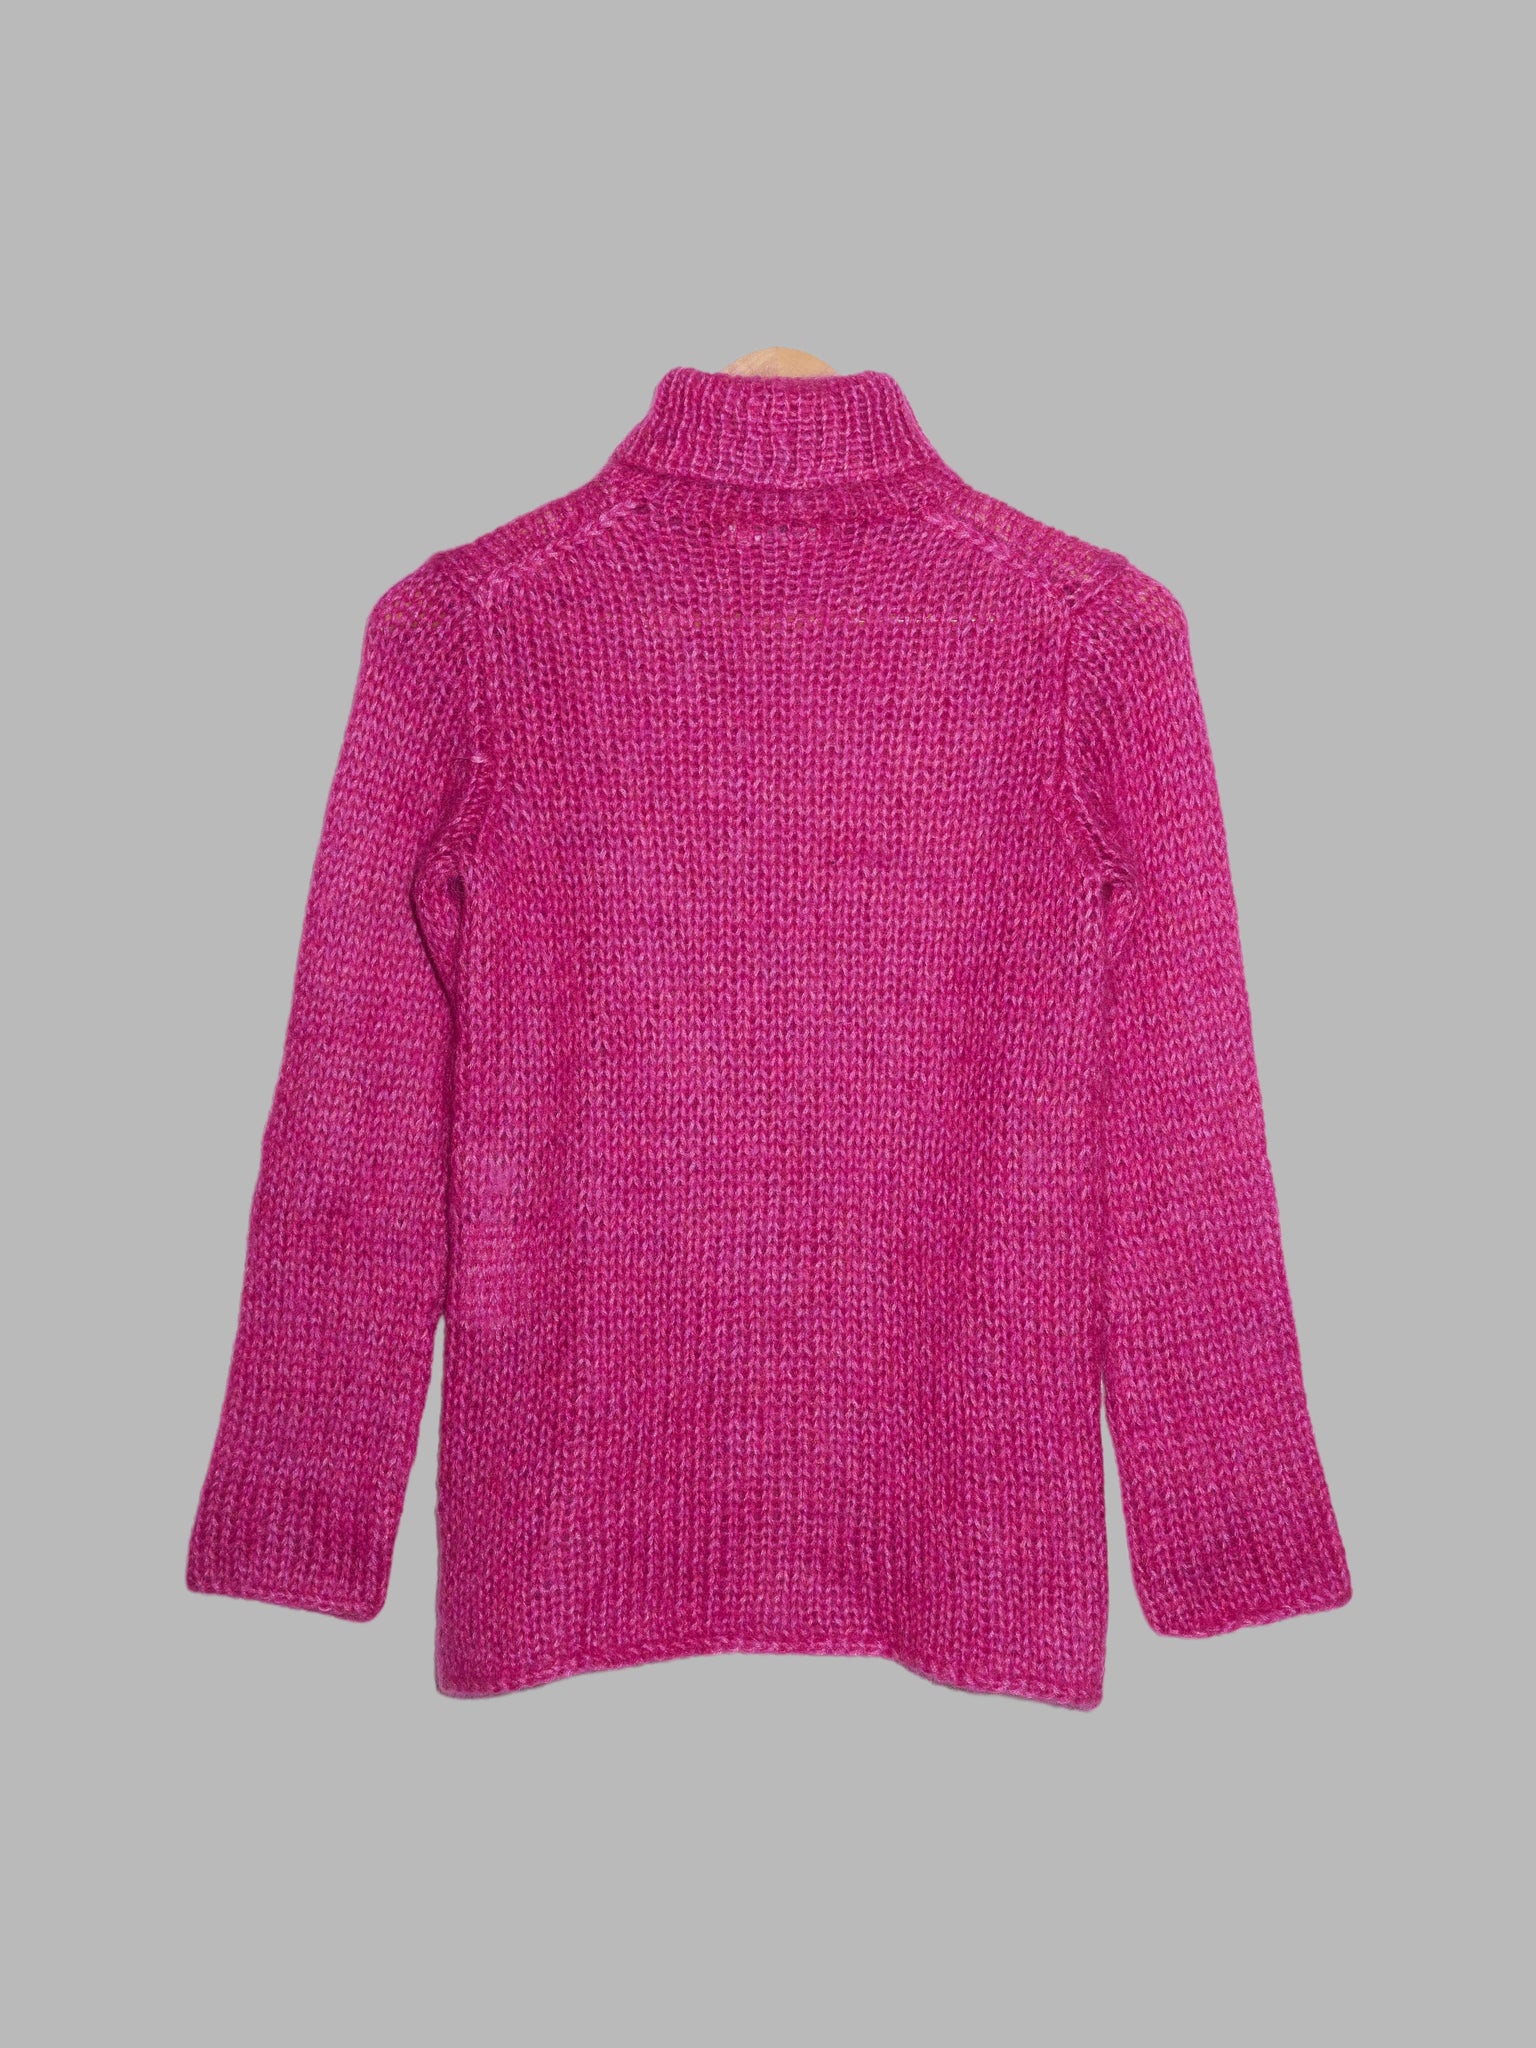 Robe de Chambre Comme des Garcons AW1999 pink mohair turtleneck